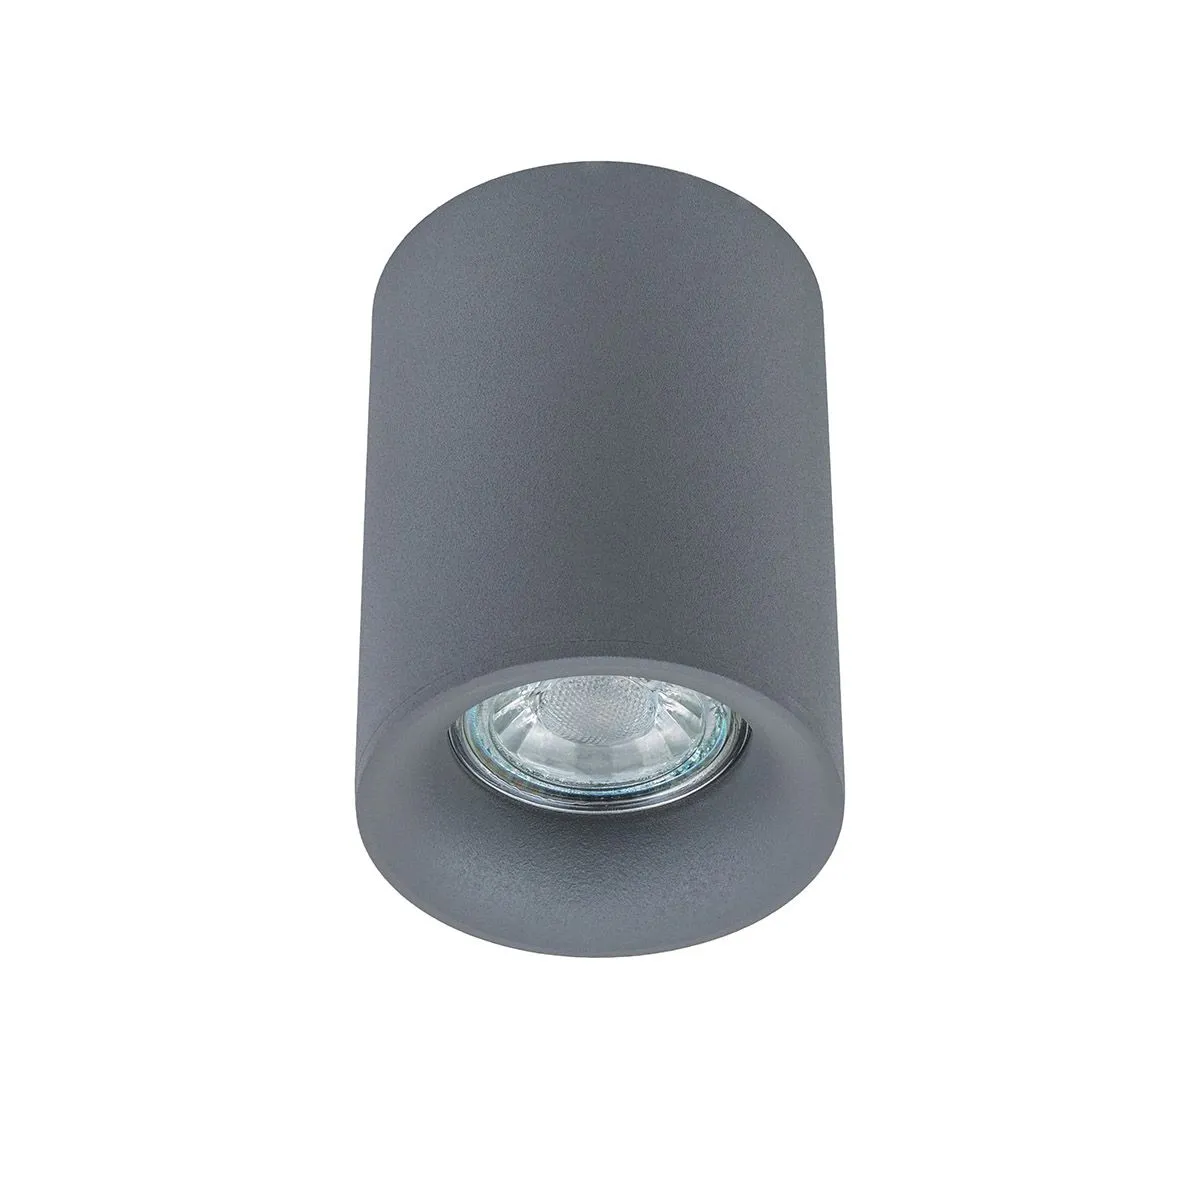 Flynn, nowoczesna lampa natynkowa, szara, LED GU10, TM09080-GR